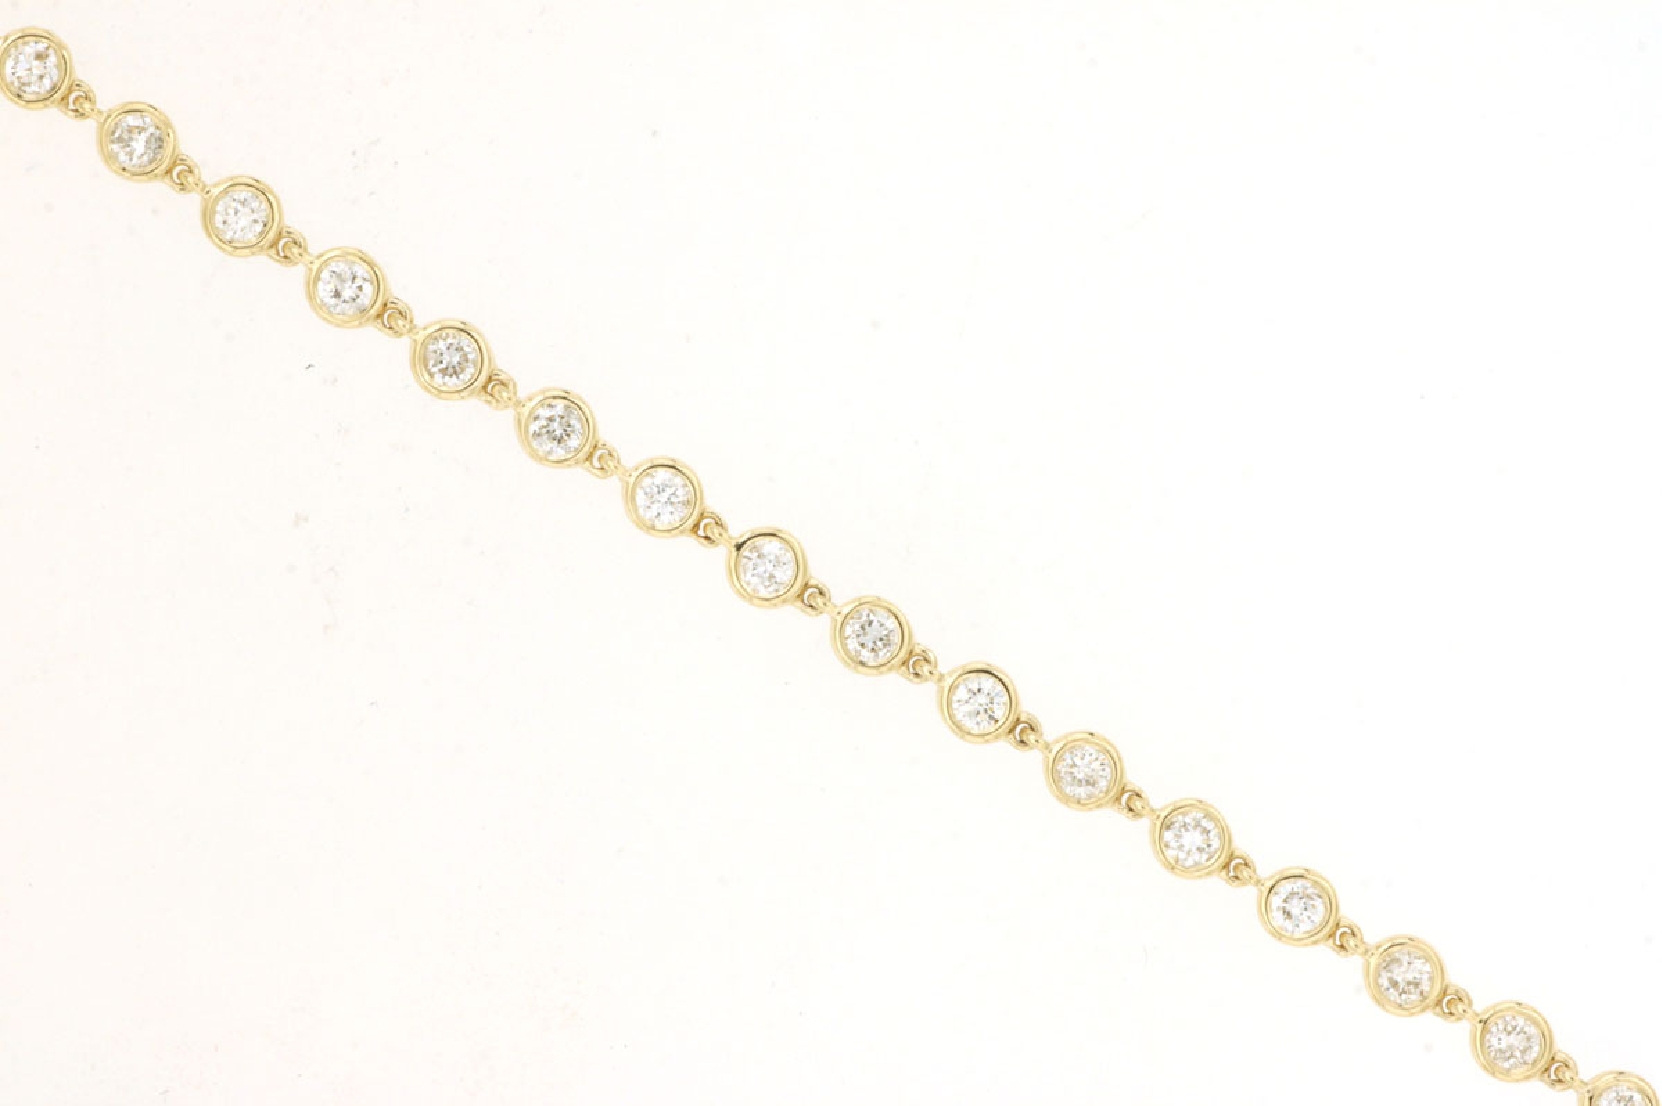 14K Yellow Gold Bezel Set Diamond Link Bracelet with Lobster Clasp 

7 Inches
1cttw Diamonds